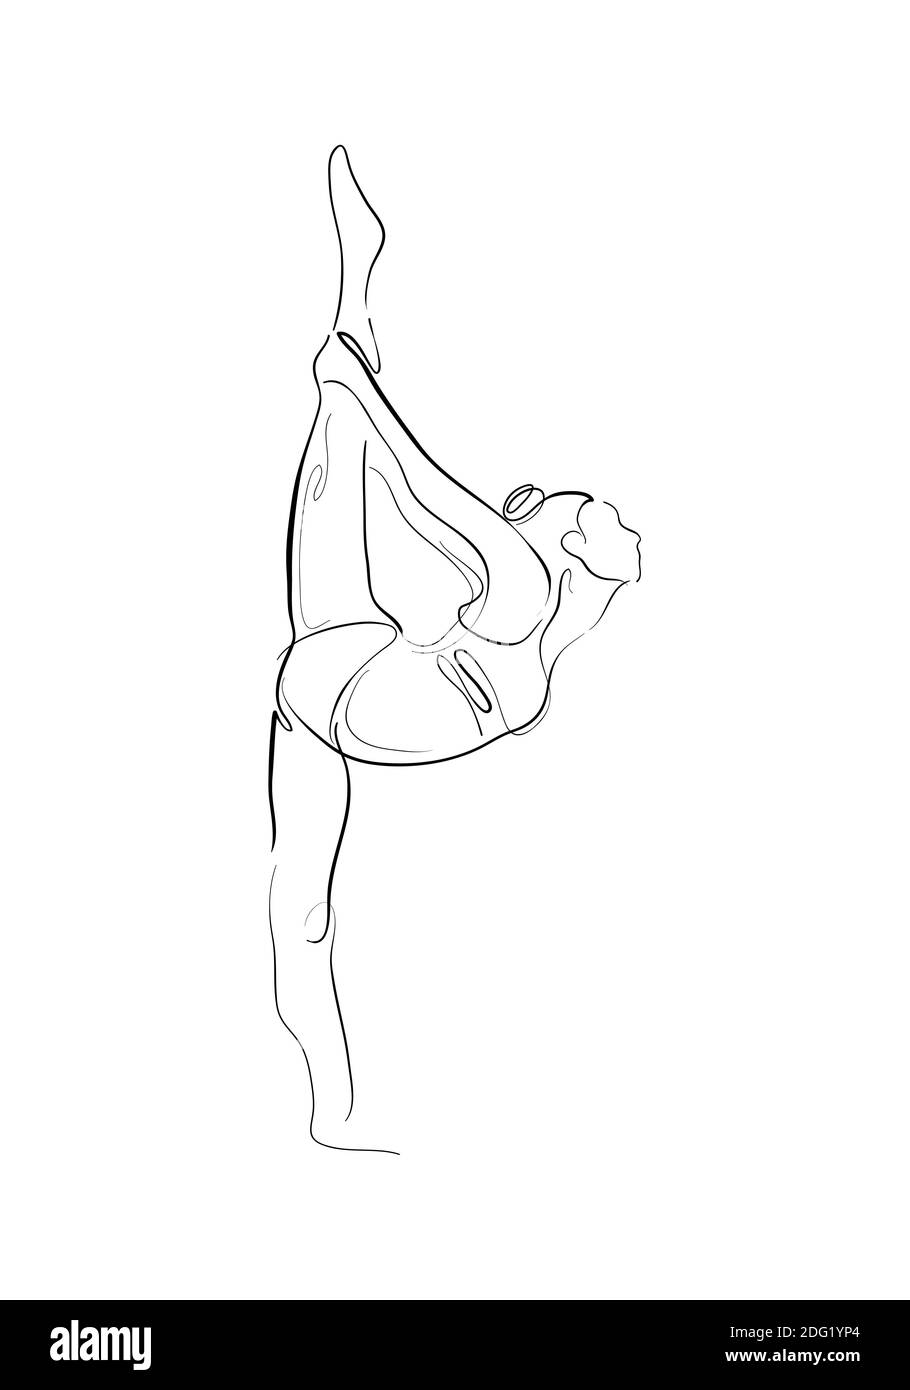 Hand drawn line art illustration of Yoganandasana pose or character woman standing in a Pose Dedicated to Yogi Yogananda. Stock Photo